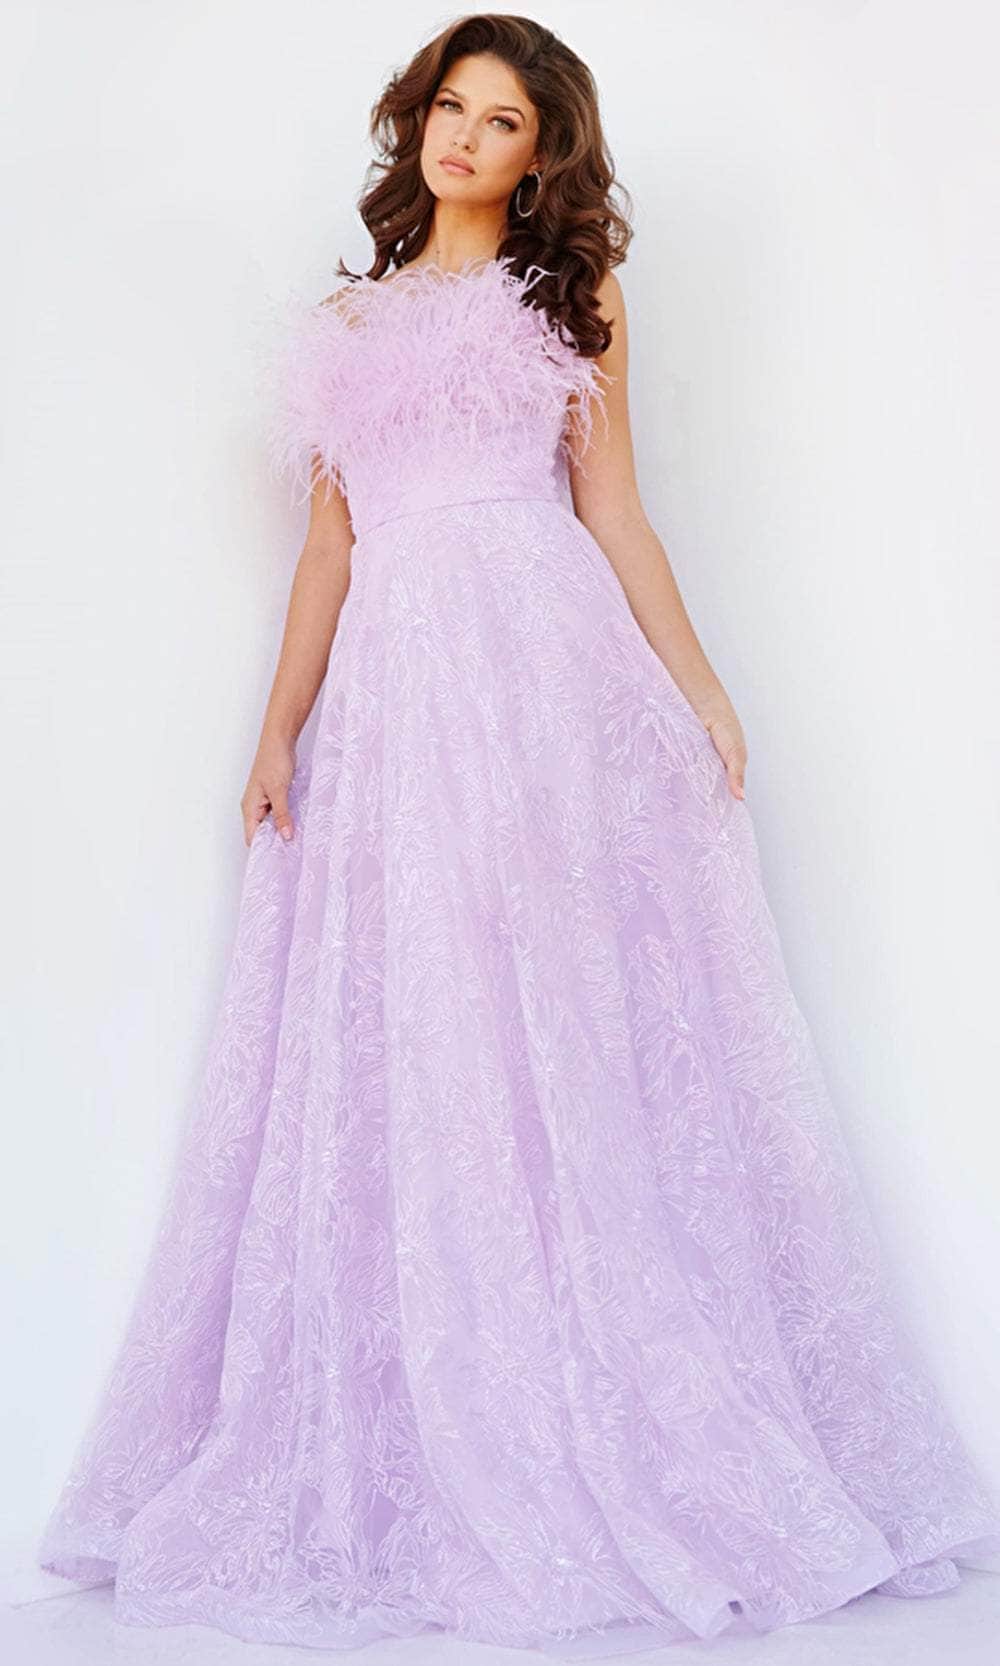 Jovani 09945 - Feather Embellished Floral Gown Prom Dresses 00 / Light-Purple